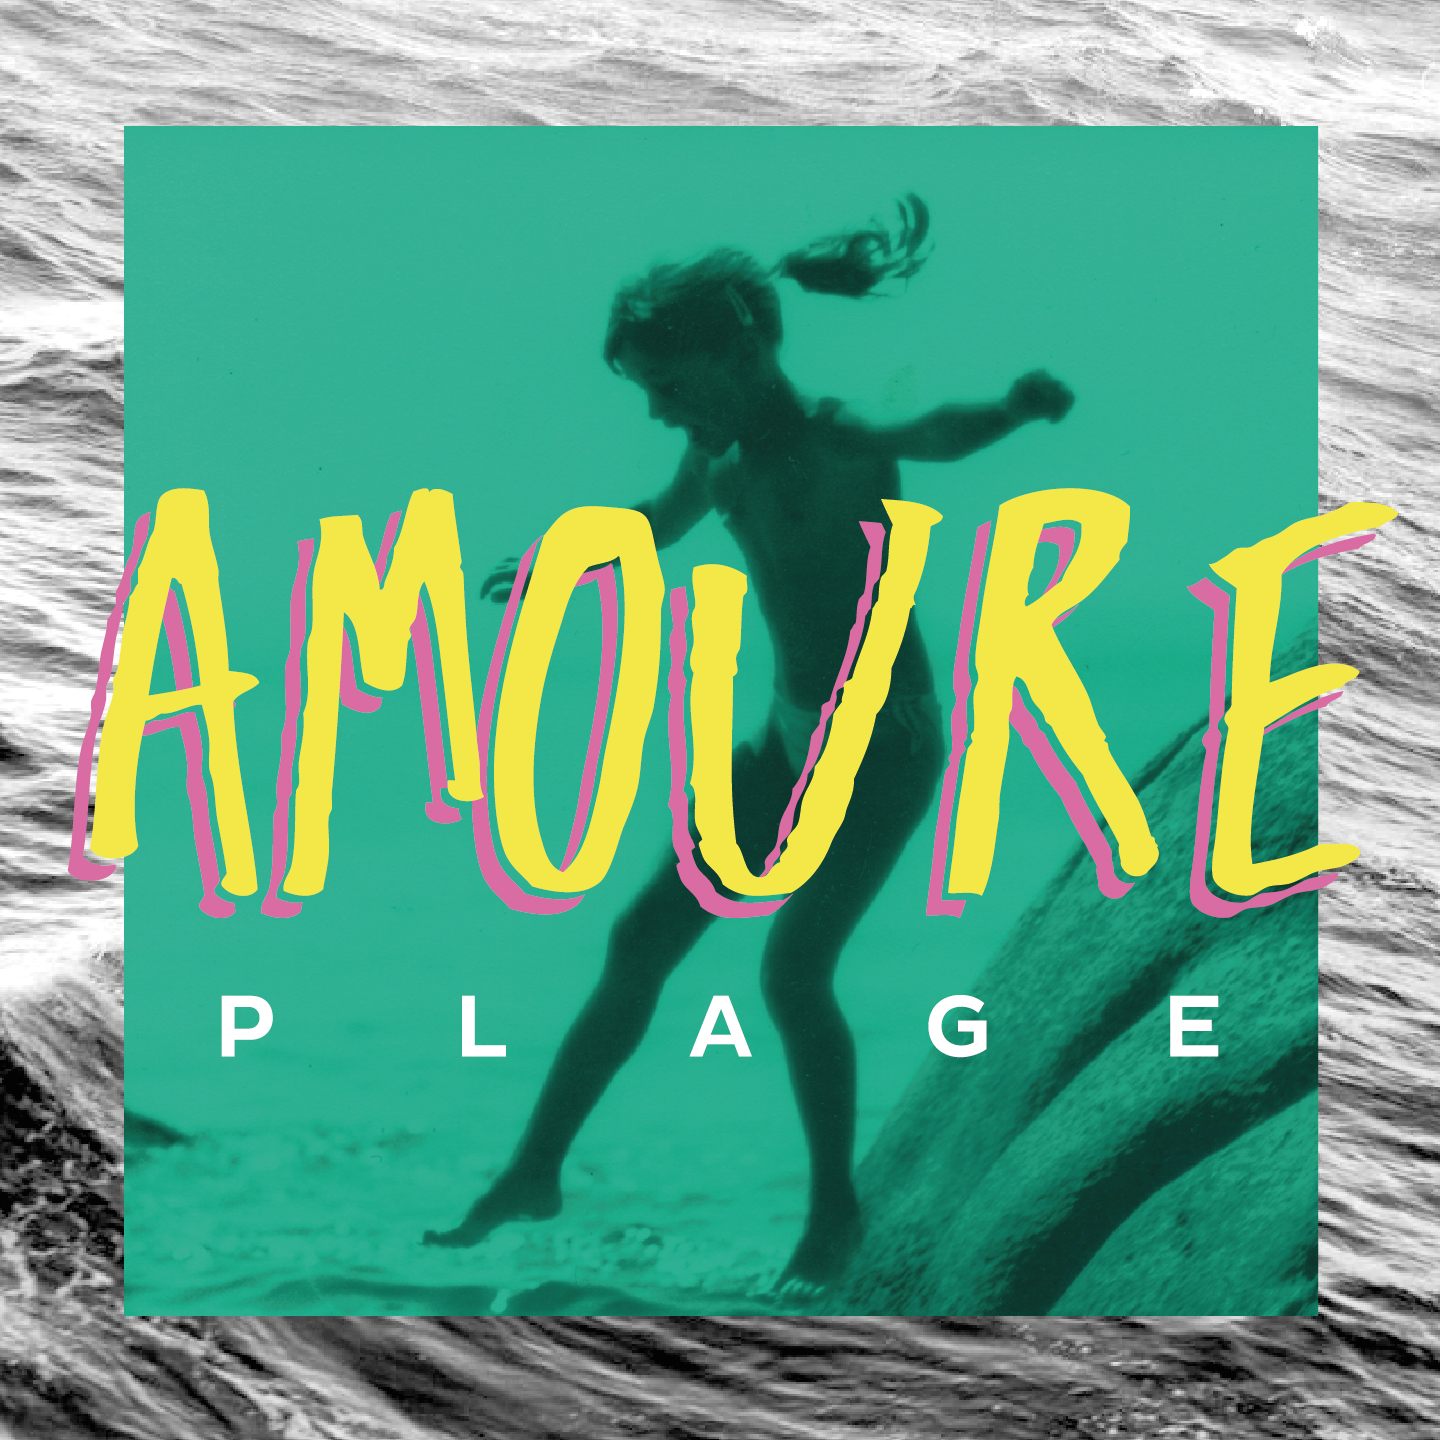 Amoure - Plage artwork - Copie